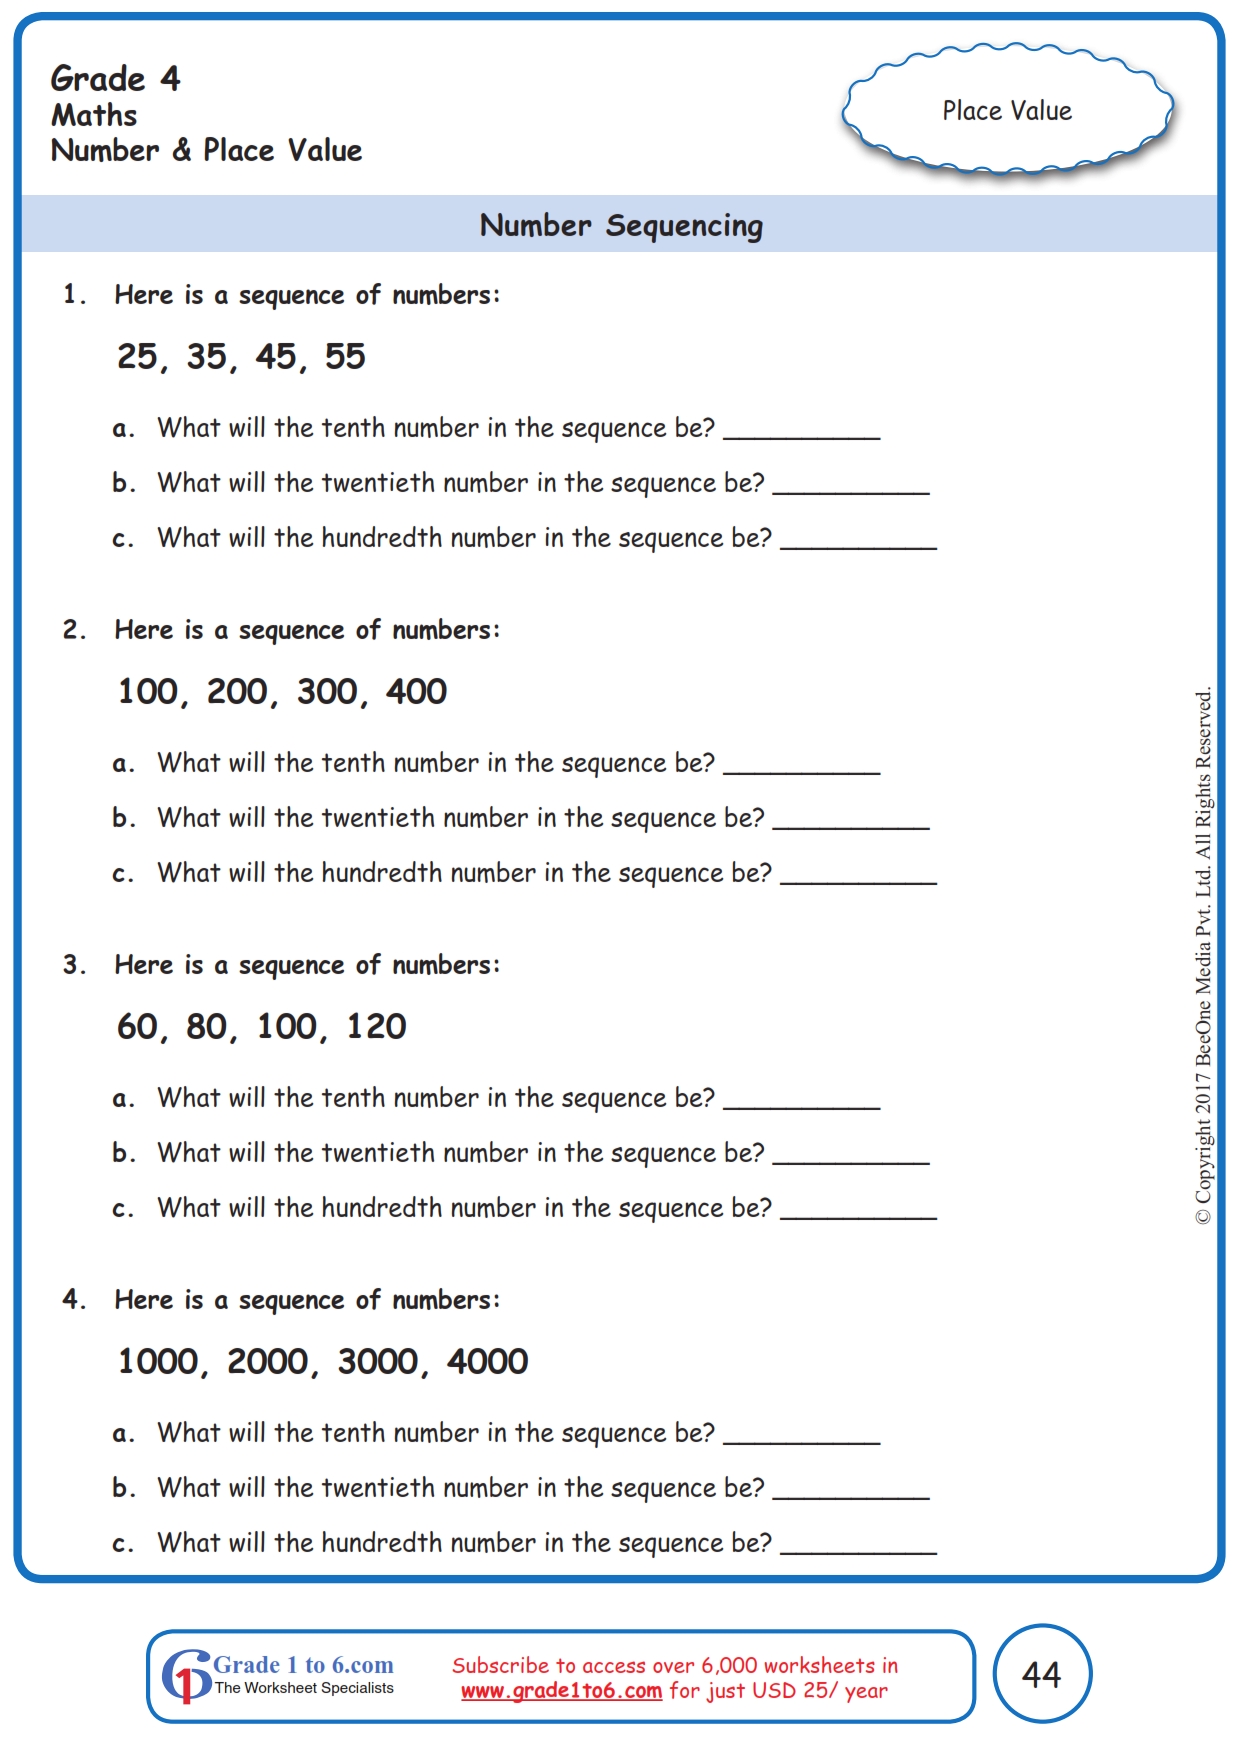 grade 4 number sequences worksheets www grade1to6 com